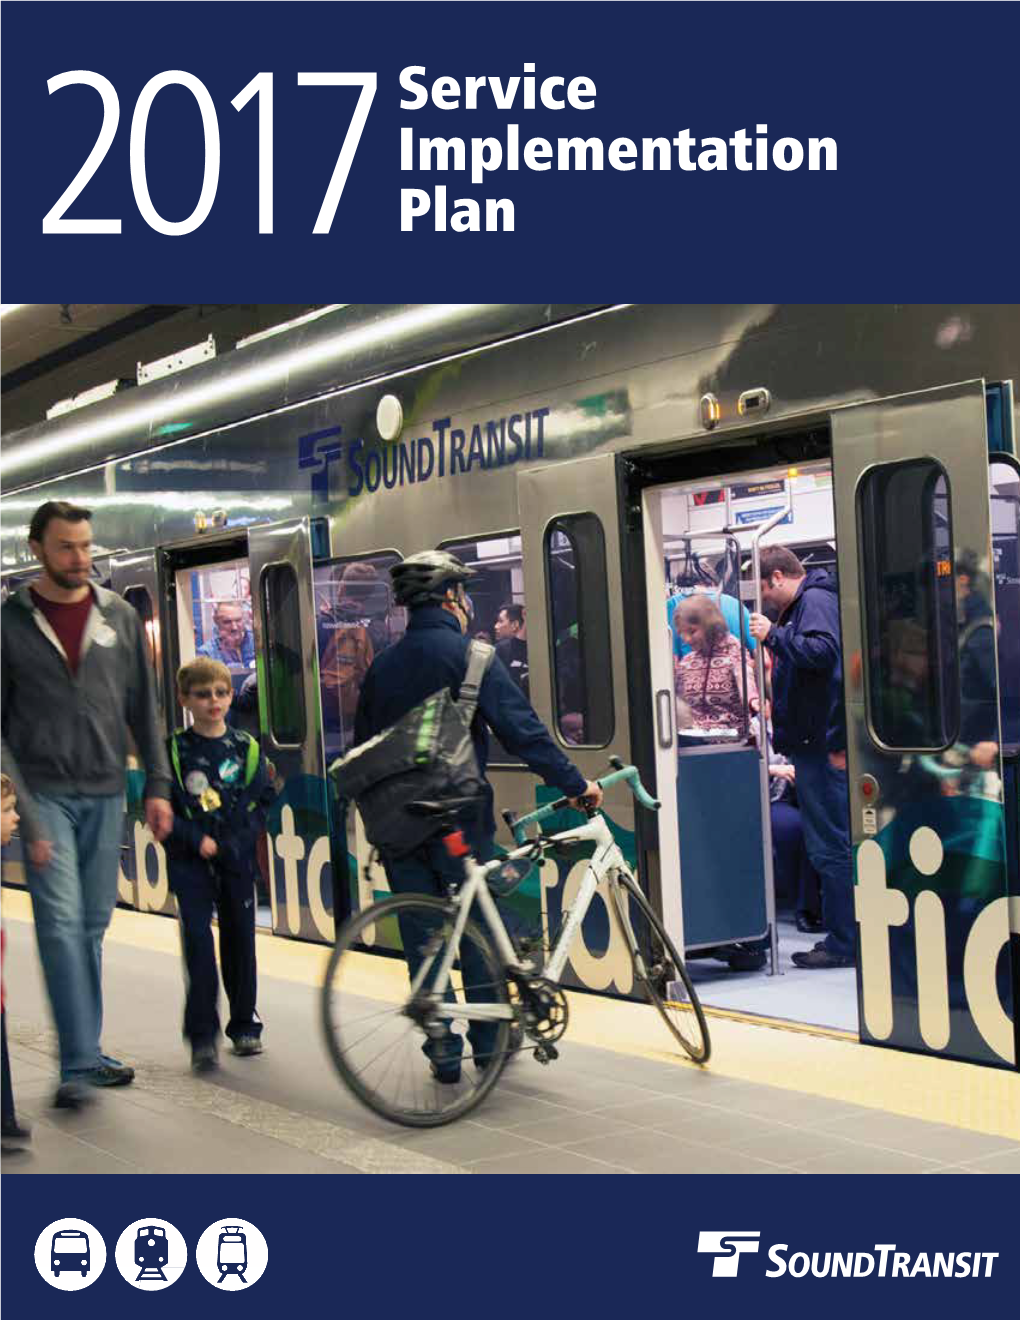 2017 Service Implementation Plan